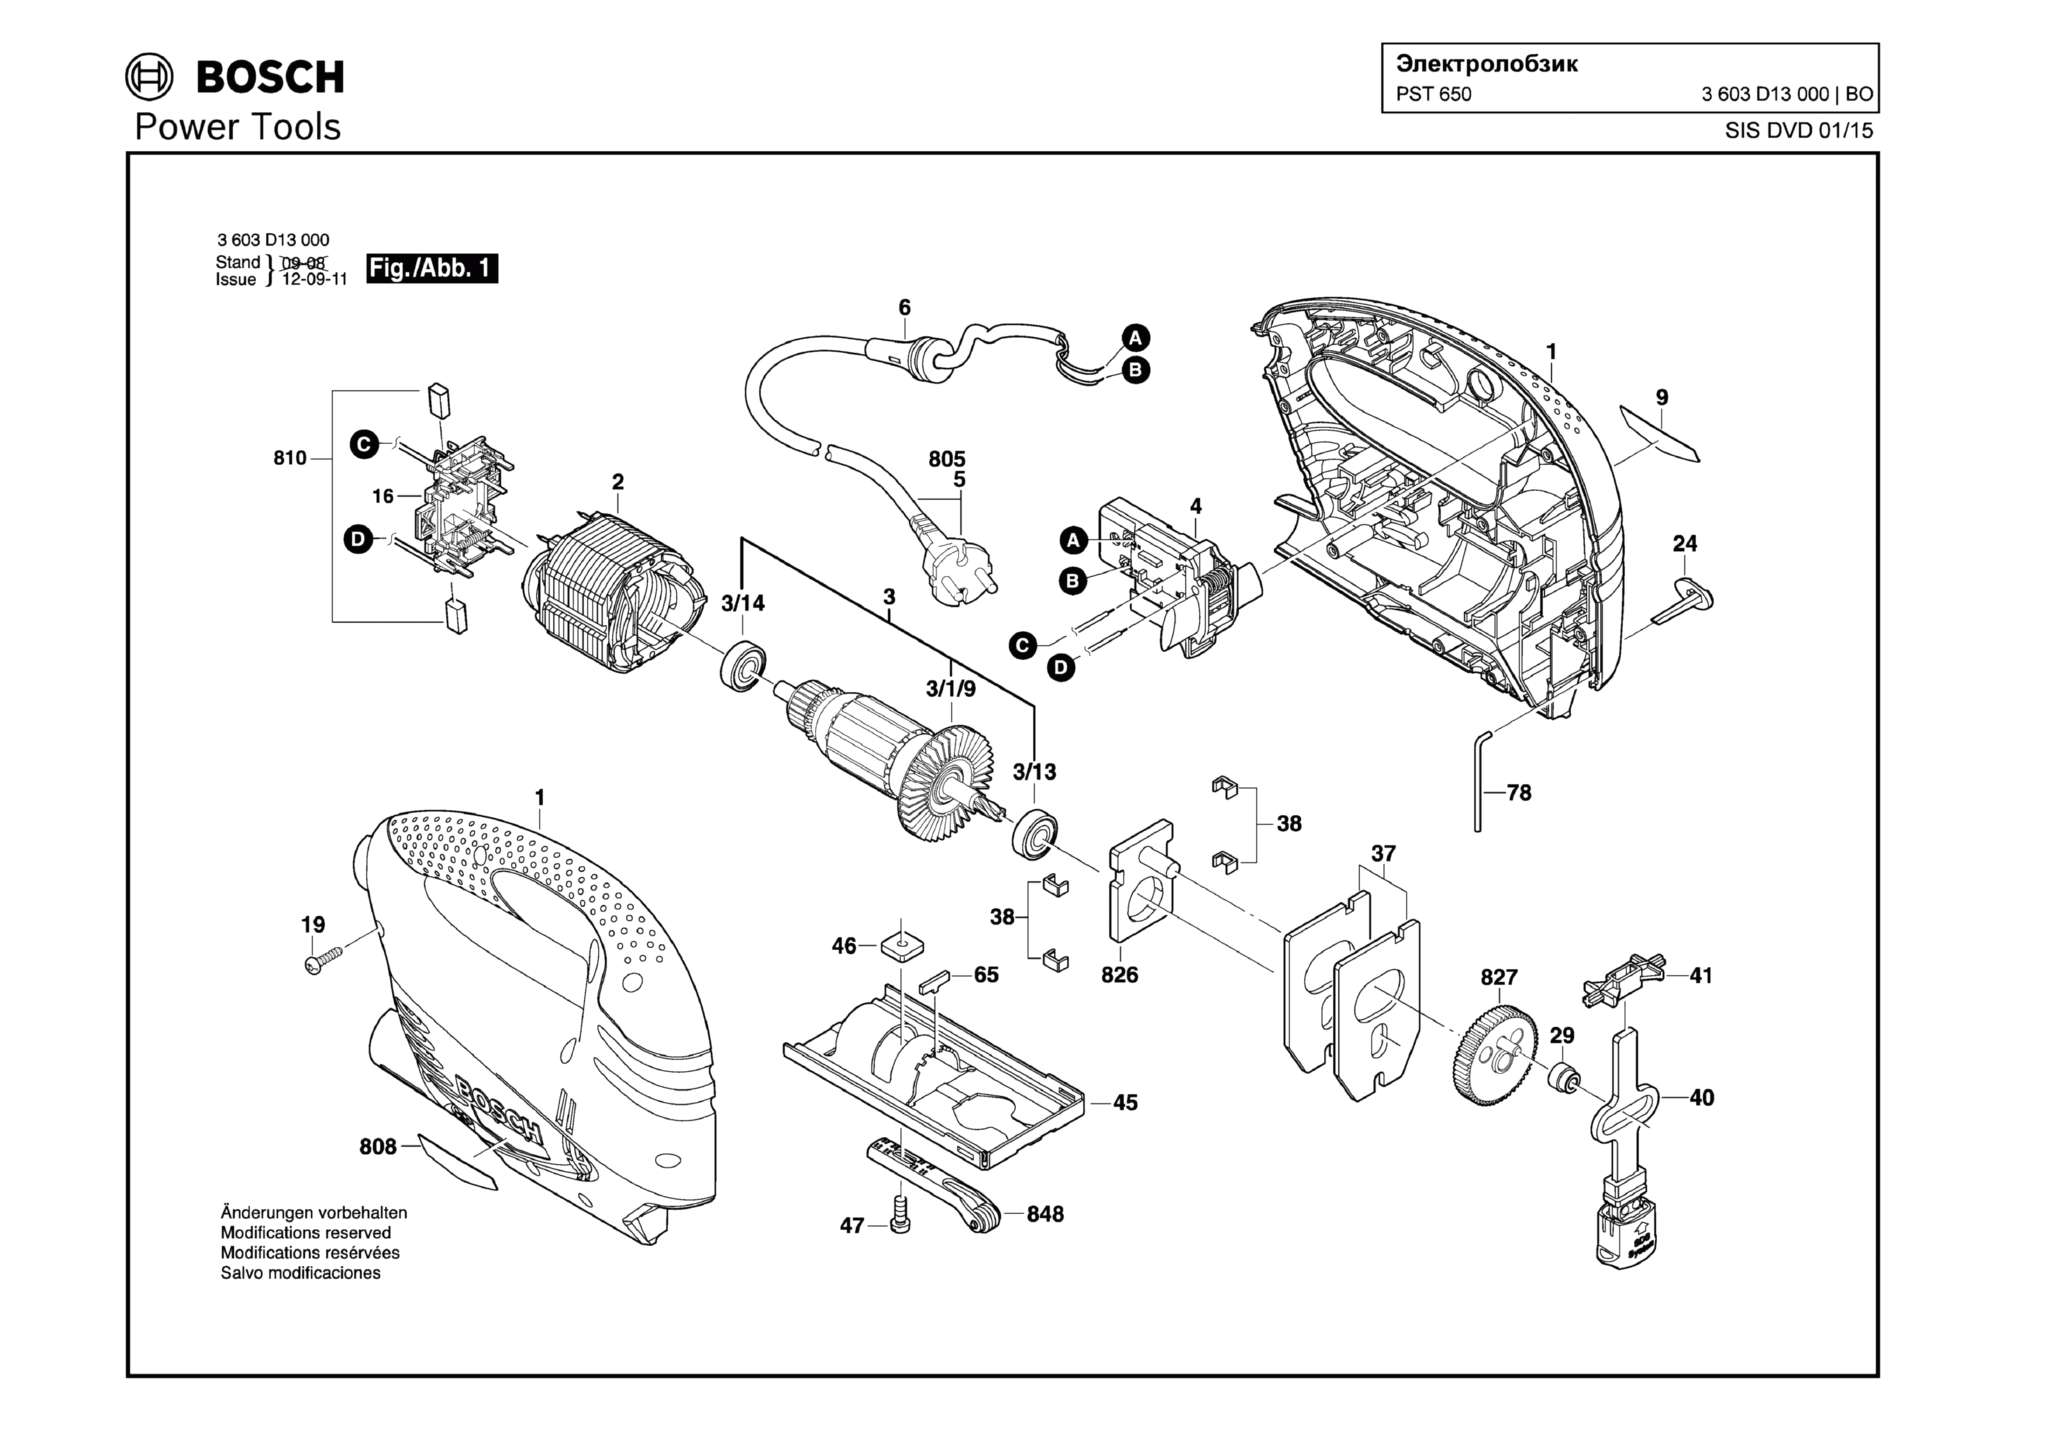 Запчасти, схема и деталировка Bosch PST 650 (ТИП 3603D13000)